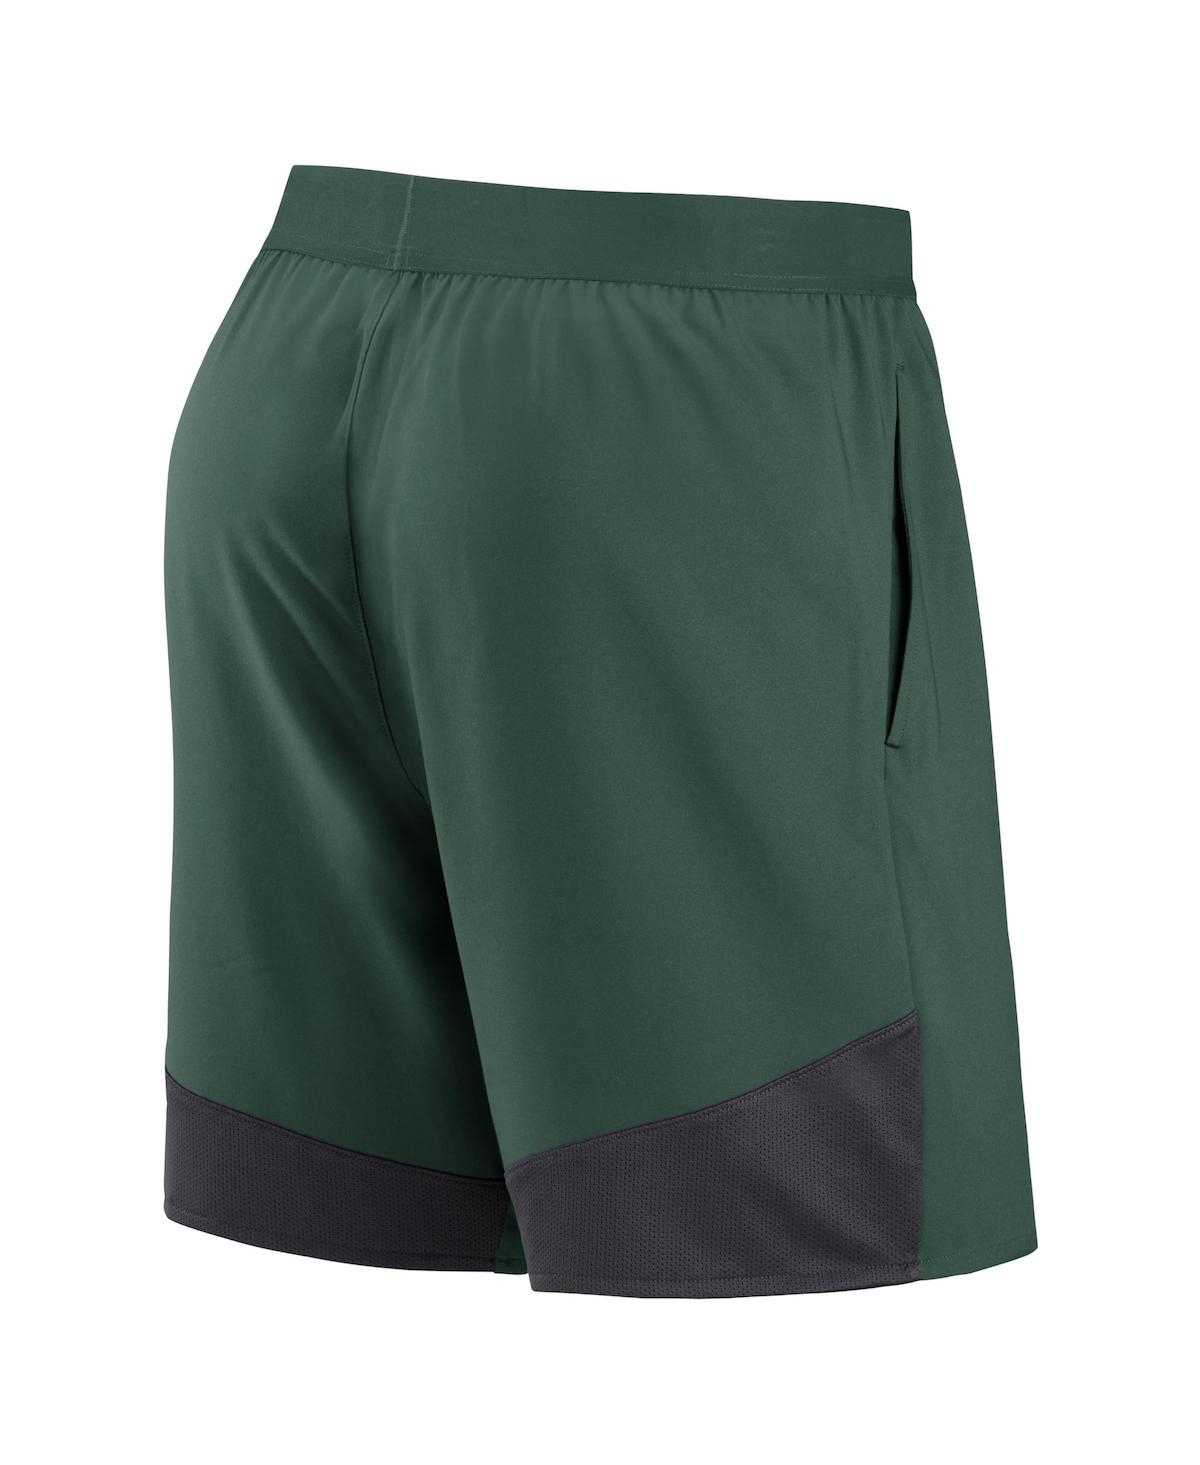 Shop Nike Men's  Green Green Bay Packers Stretch Performance Shorts